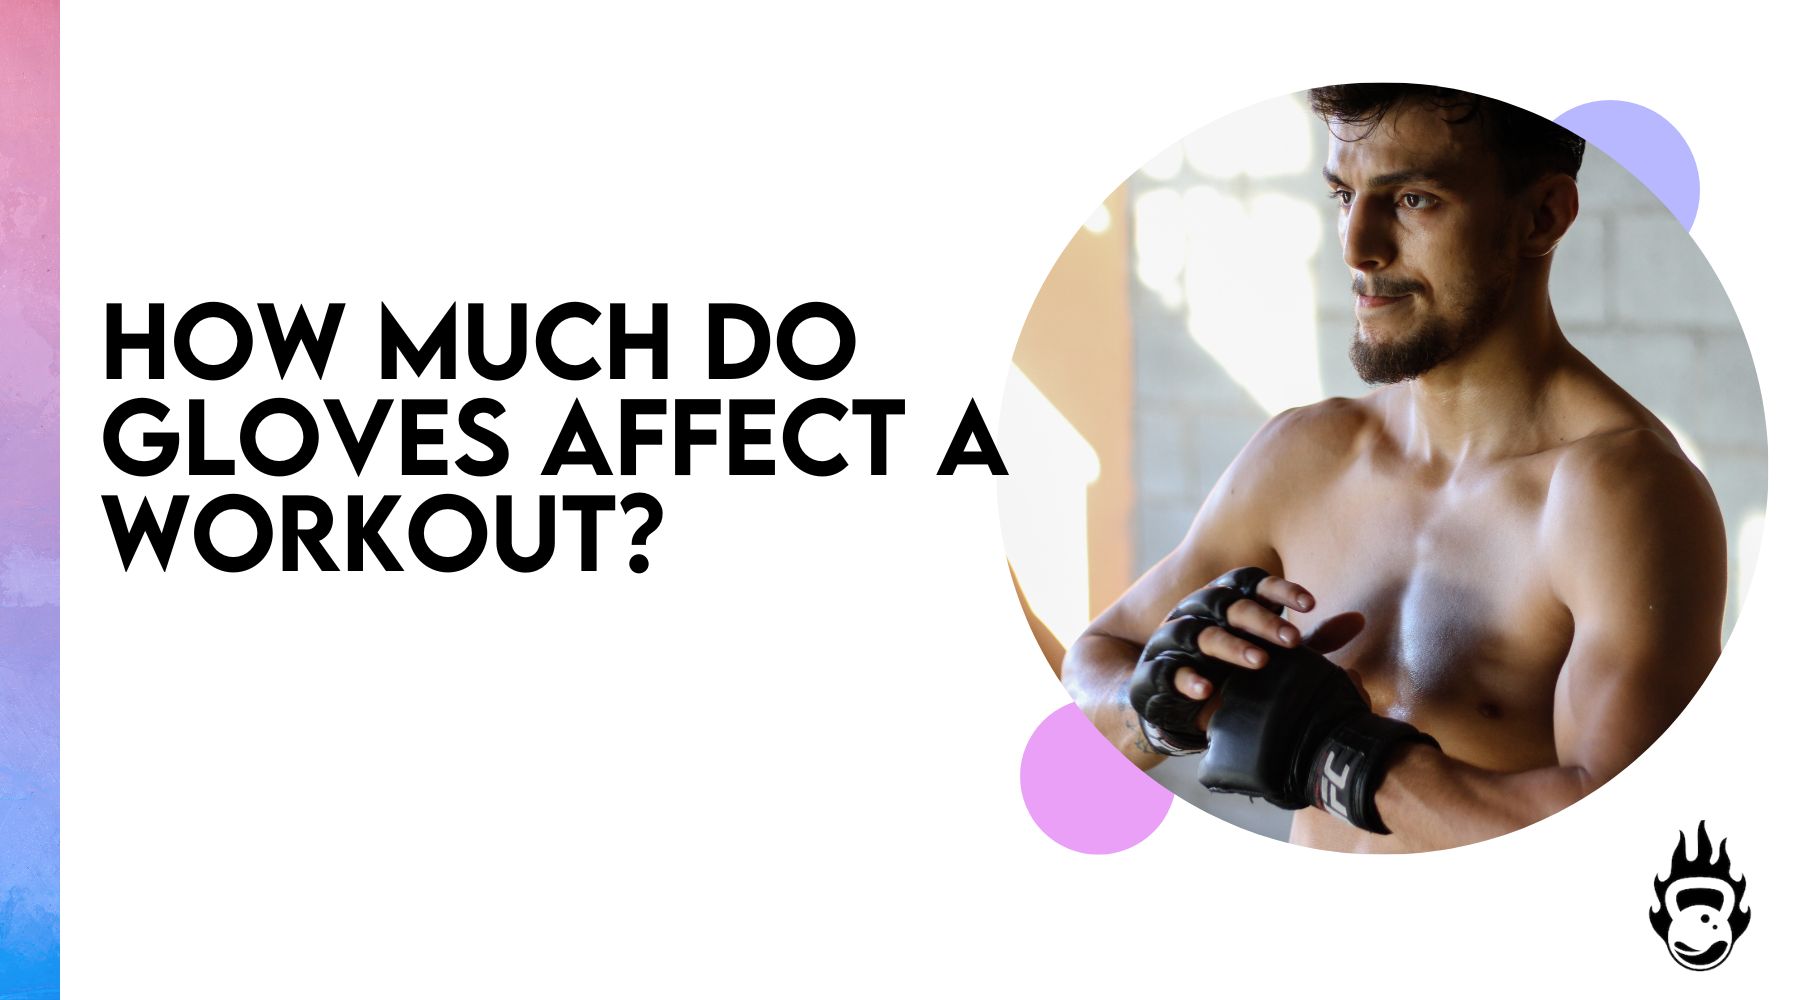 How much do gloves affect a workout?